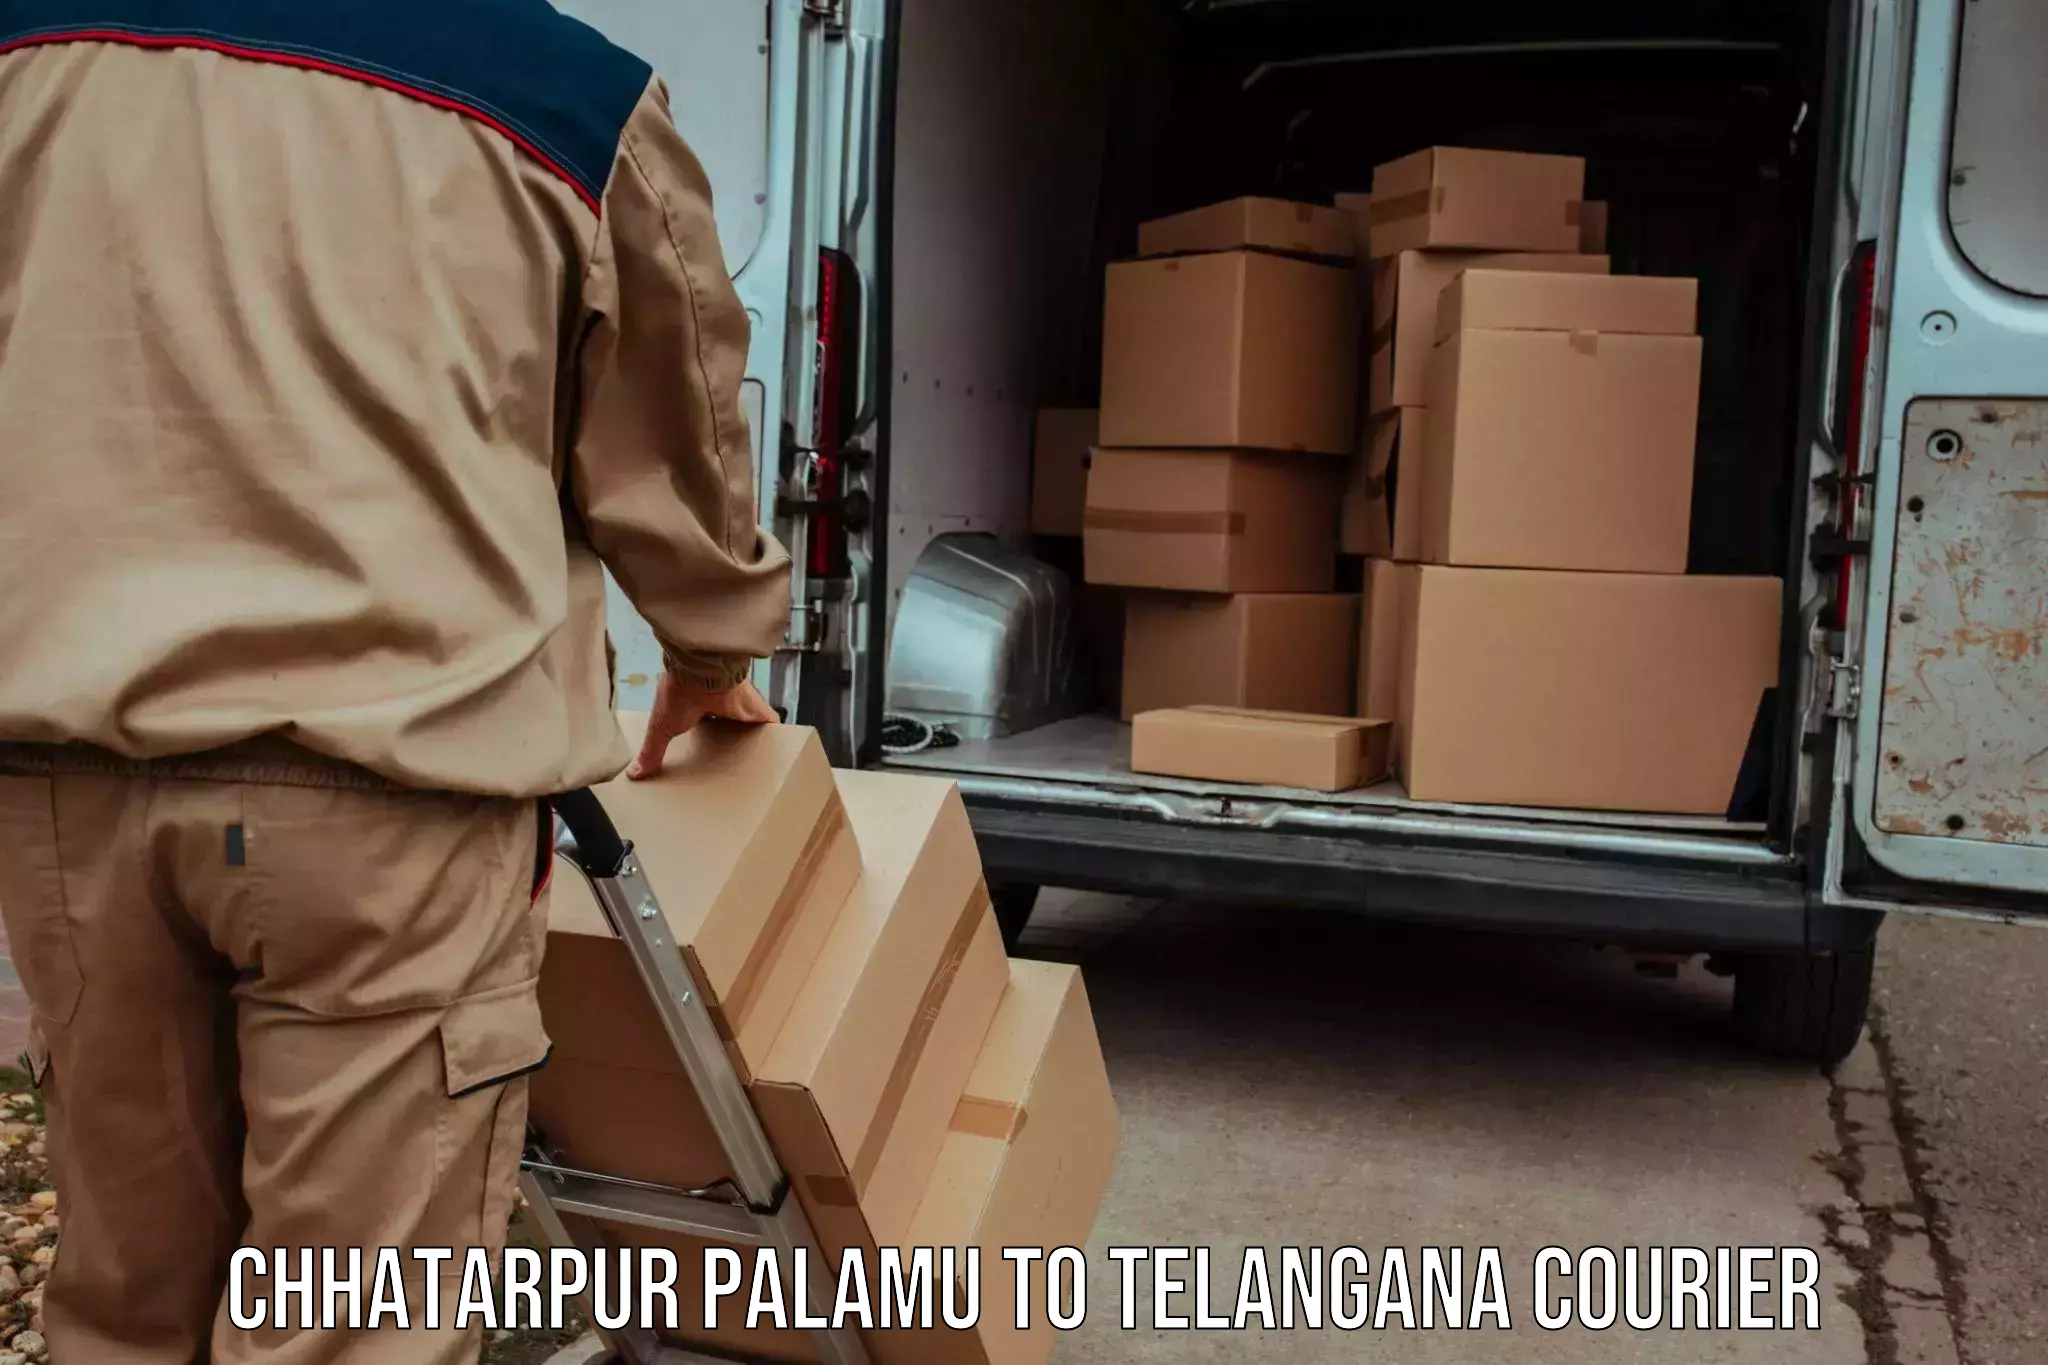 Premium courier services Chhatarpur Palamu to Gollapalli